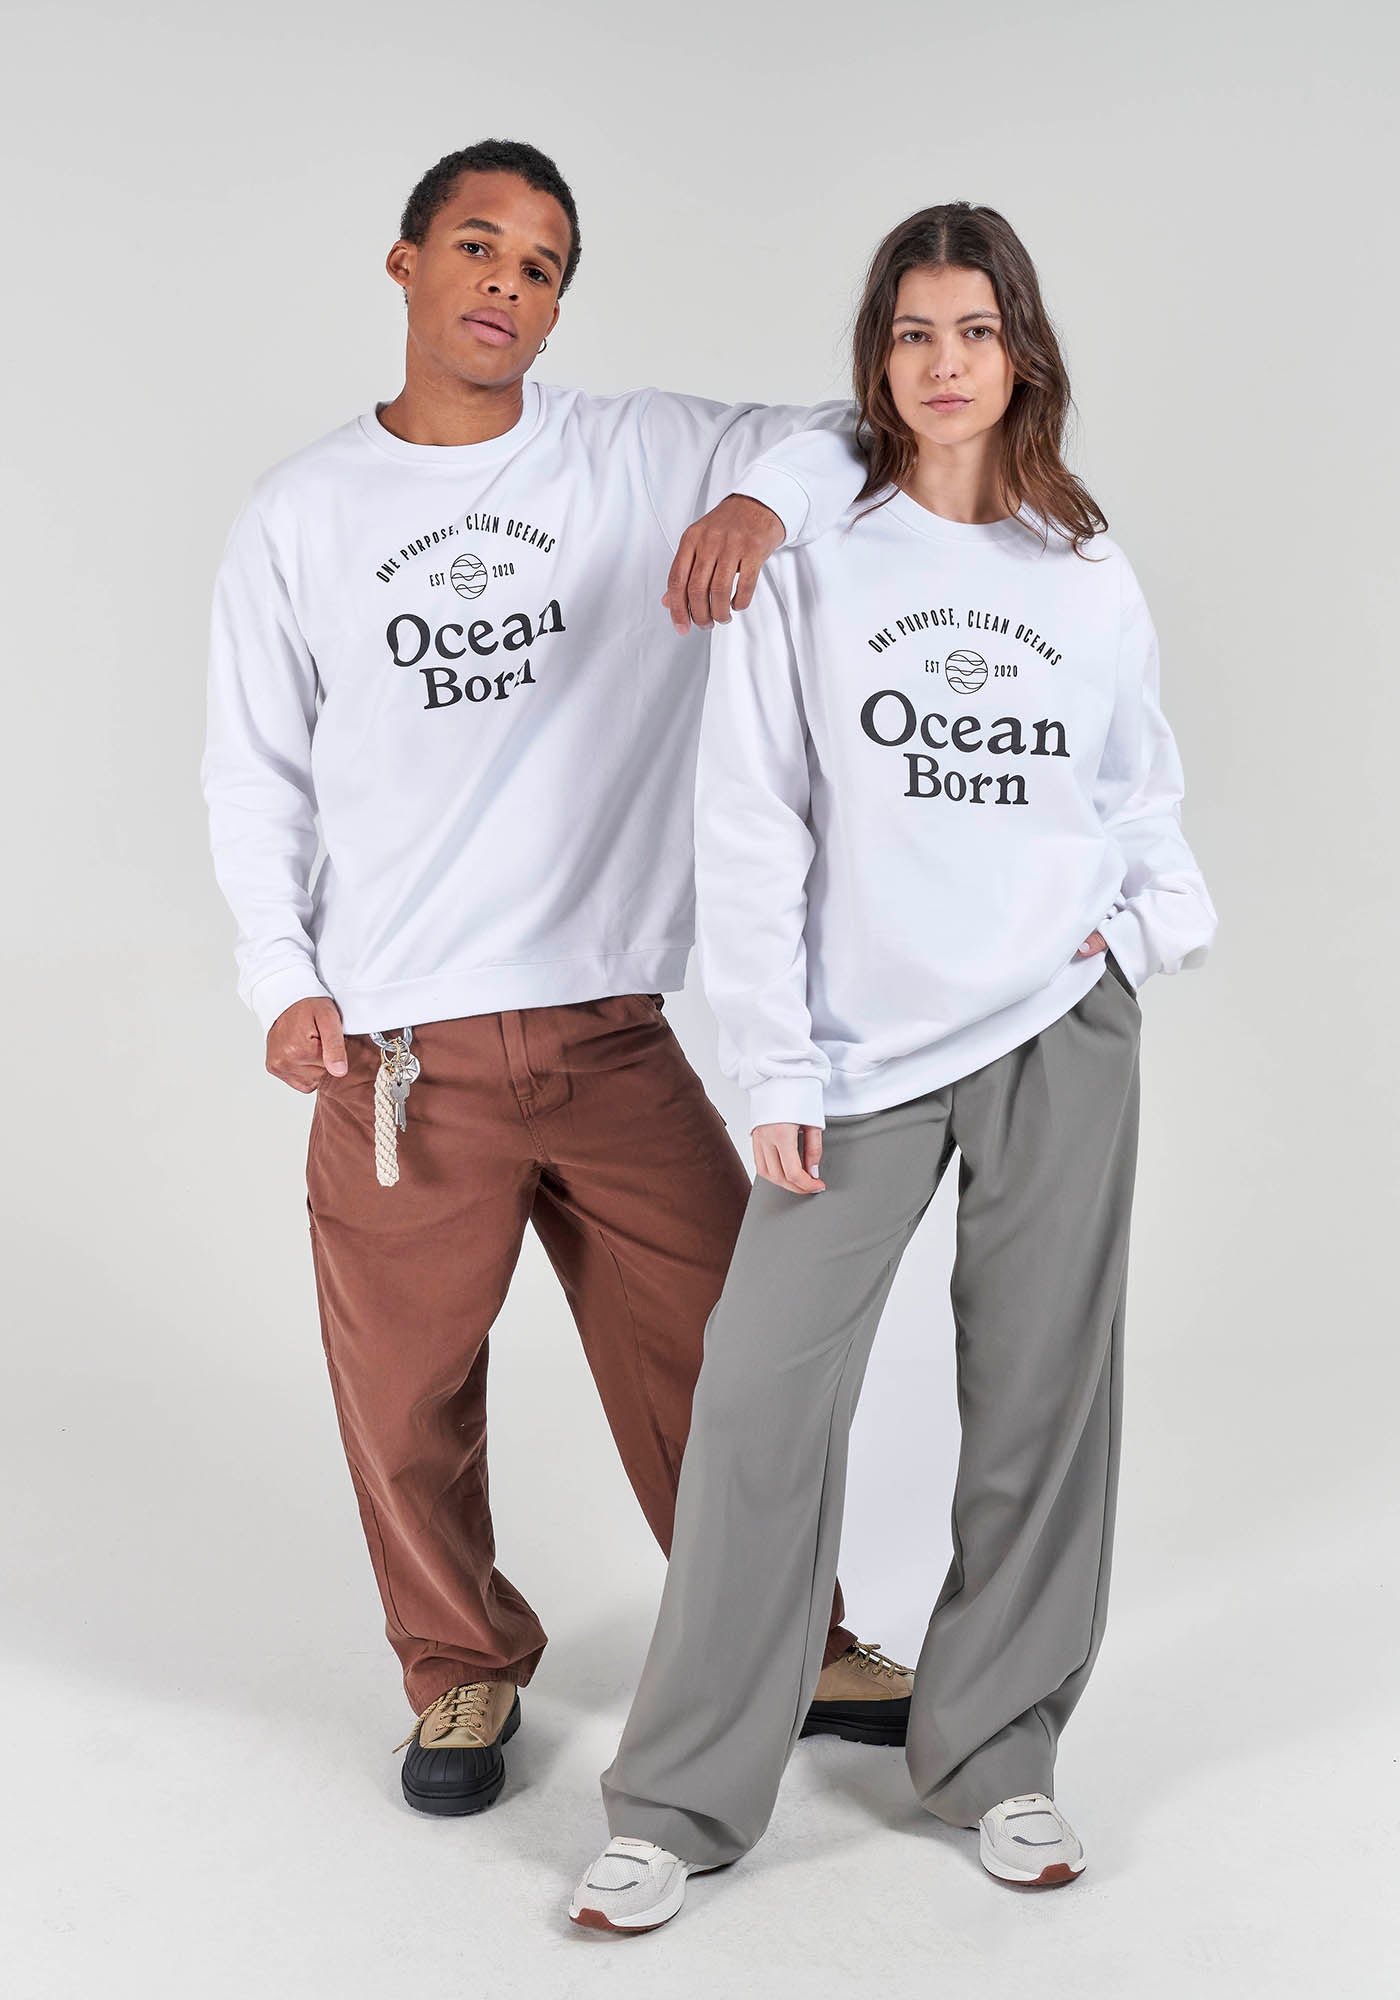 More Ocean, Less Plastic Sweatshirt